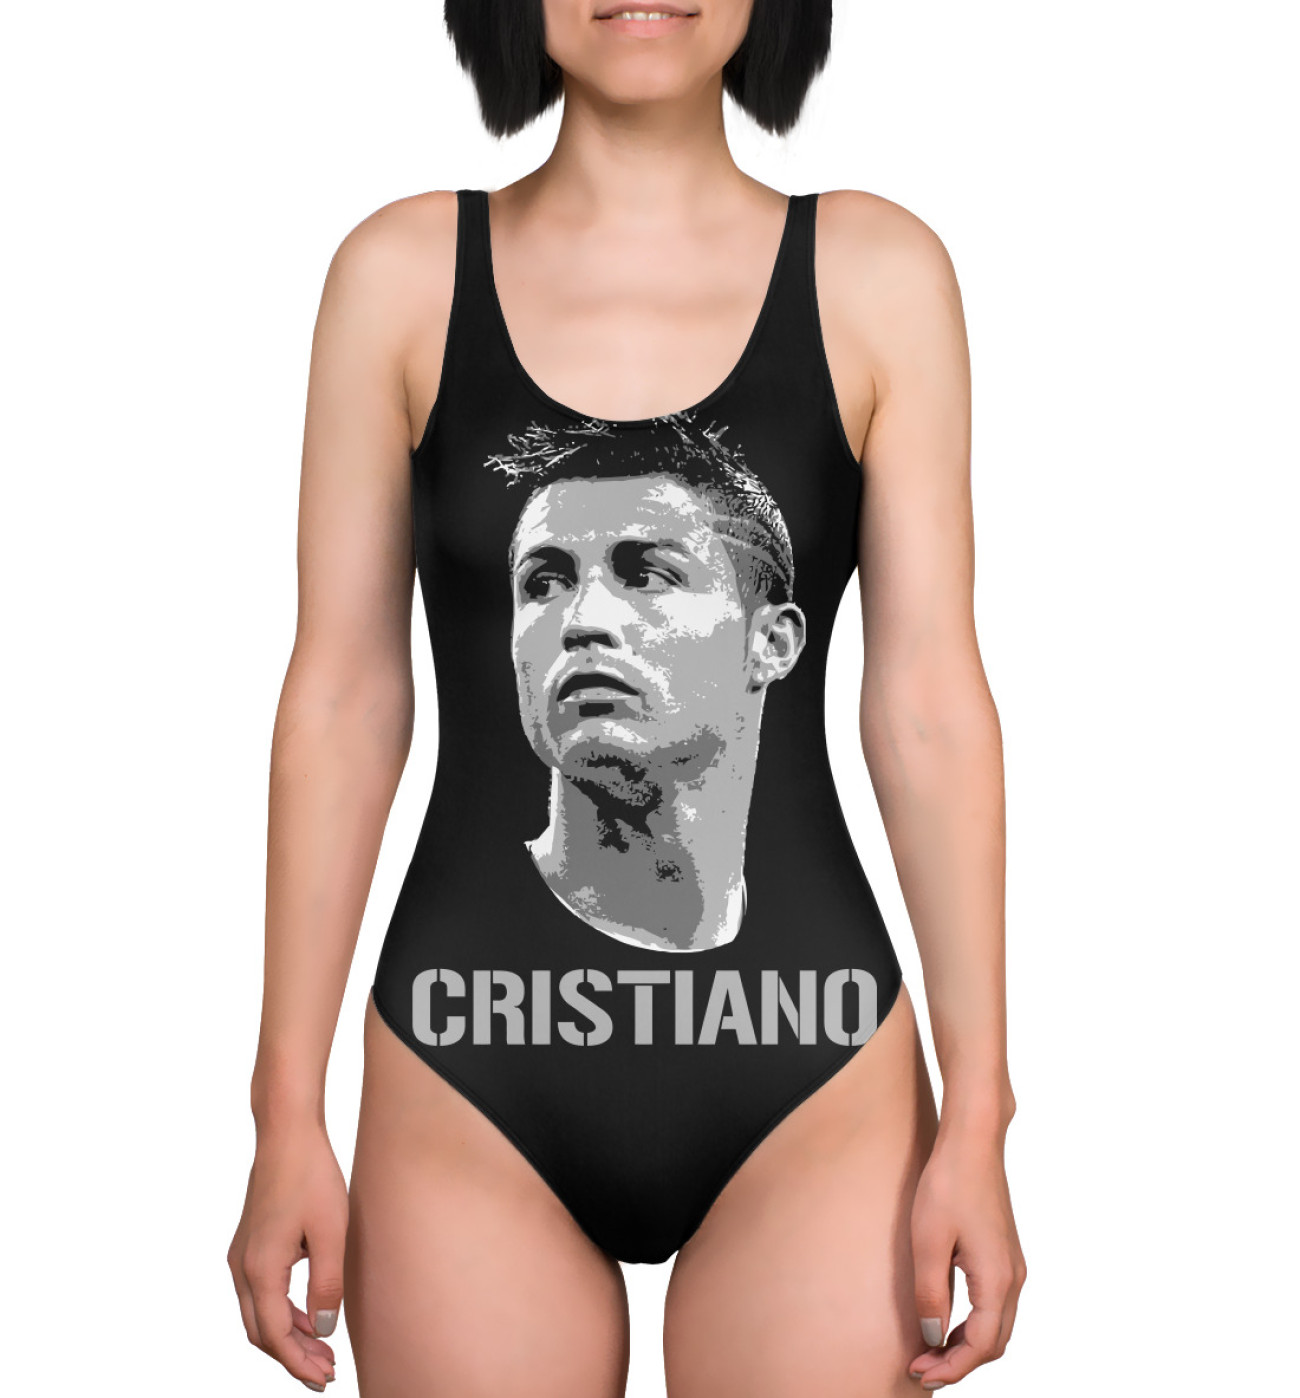 Женский Купальник-боди Cristiano Ronaldo, артикул: REA-742126-kub-1